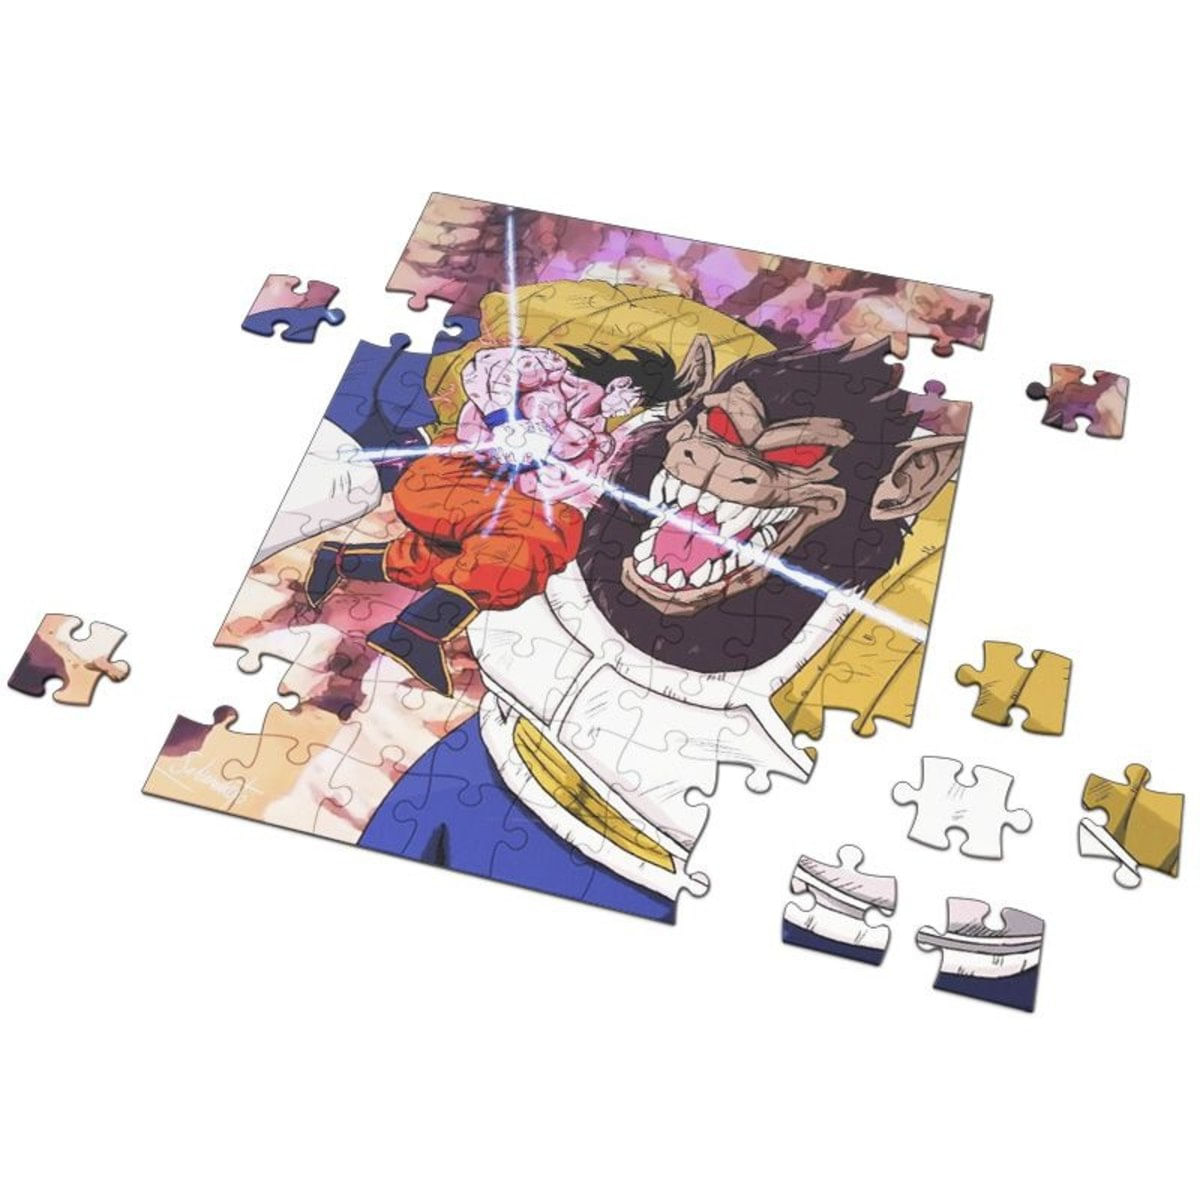 Puzzle Dragon Ball Super, 500 peças